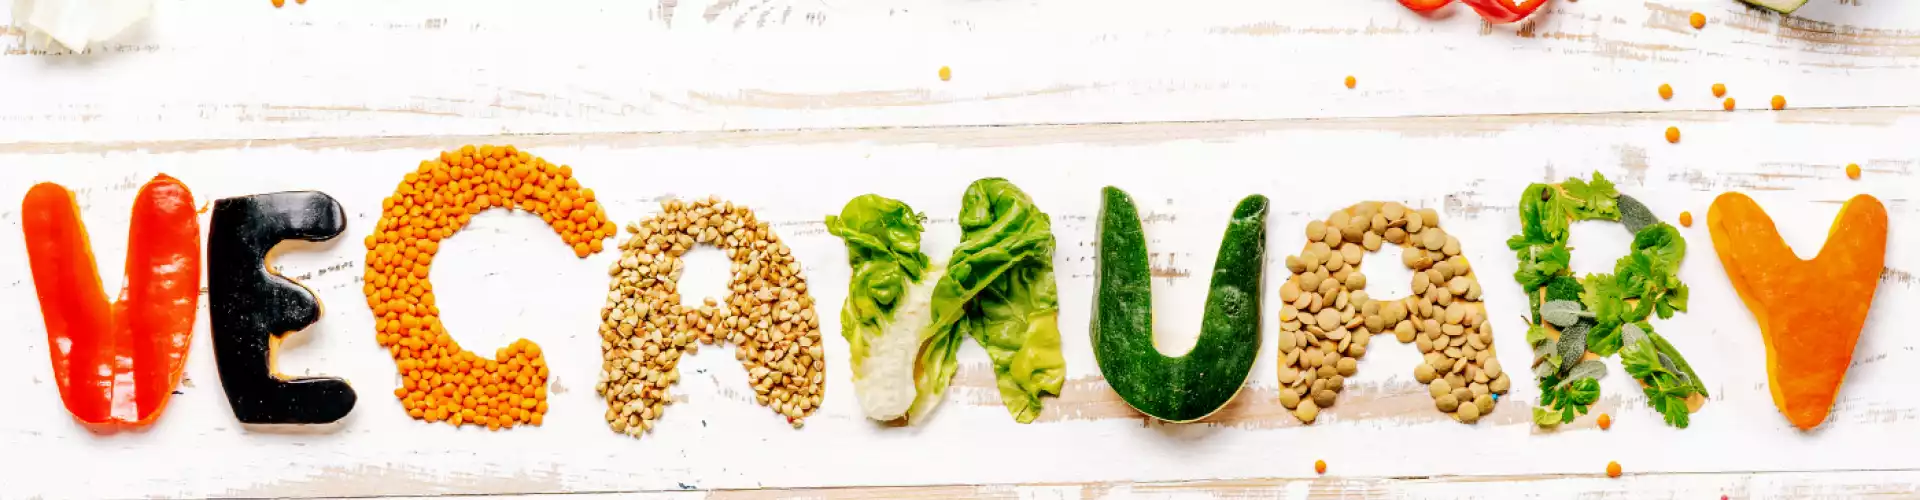 January Veganuary - it's more than cauliflower!